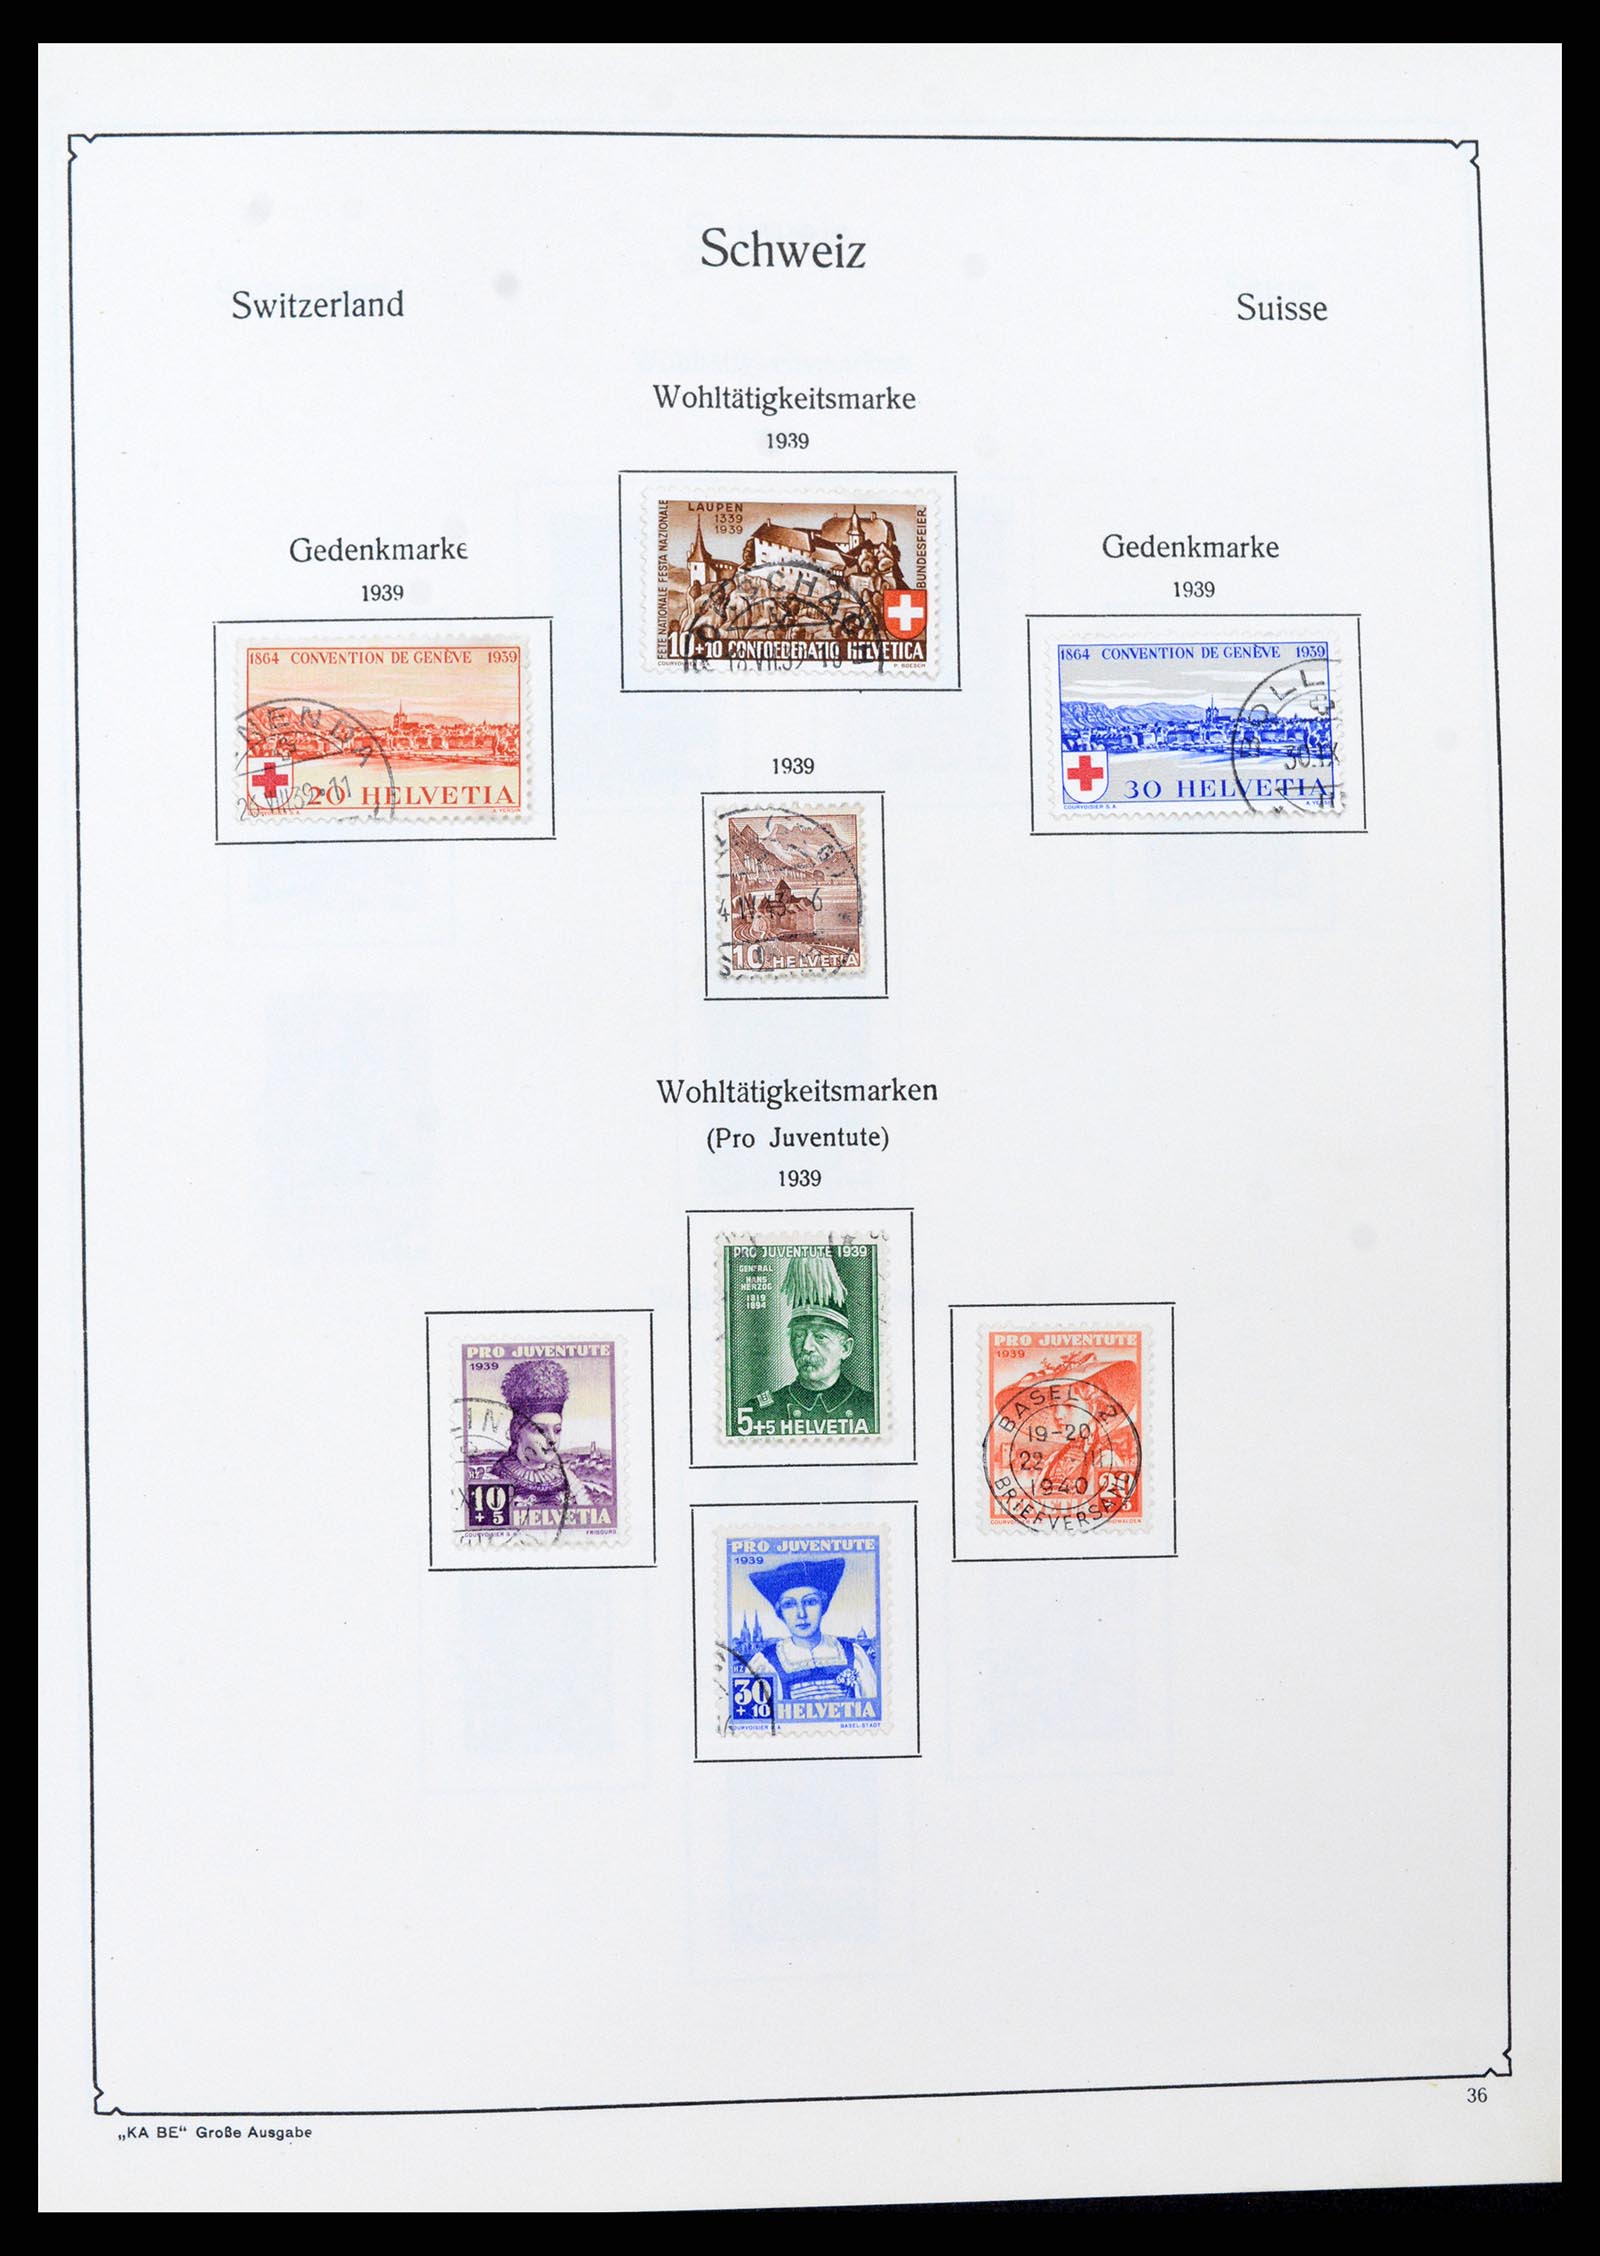 37588 035 - Stamp collection 37588 Switzerland 1854-1974.